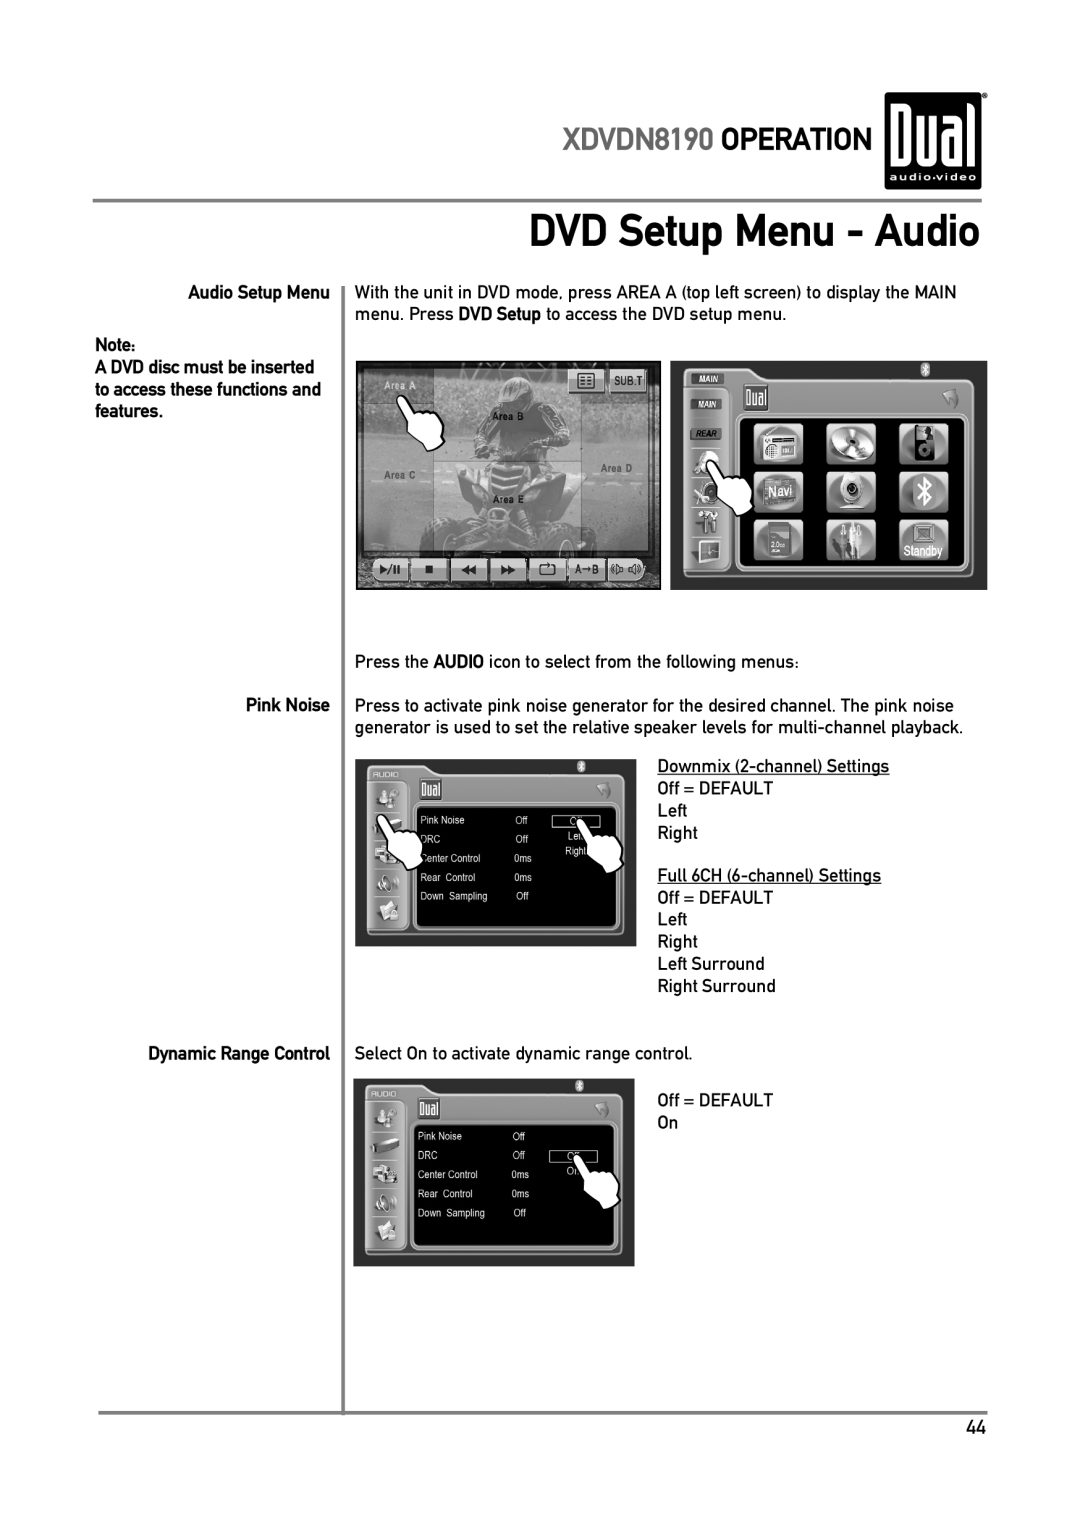 Dual owner manual DVD Setup Menu - Audio, XDVDN8190 OPERATION, Audio Setup Menu, Pink Noise Dynamic Range Control 